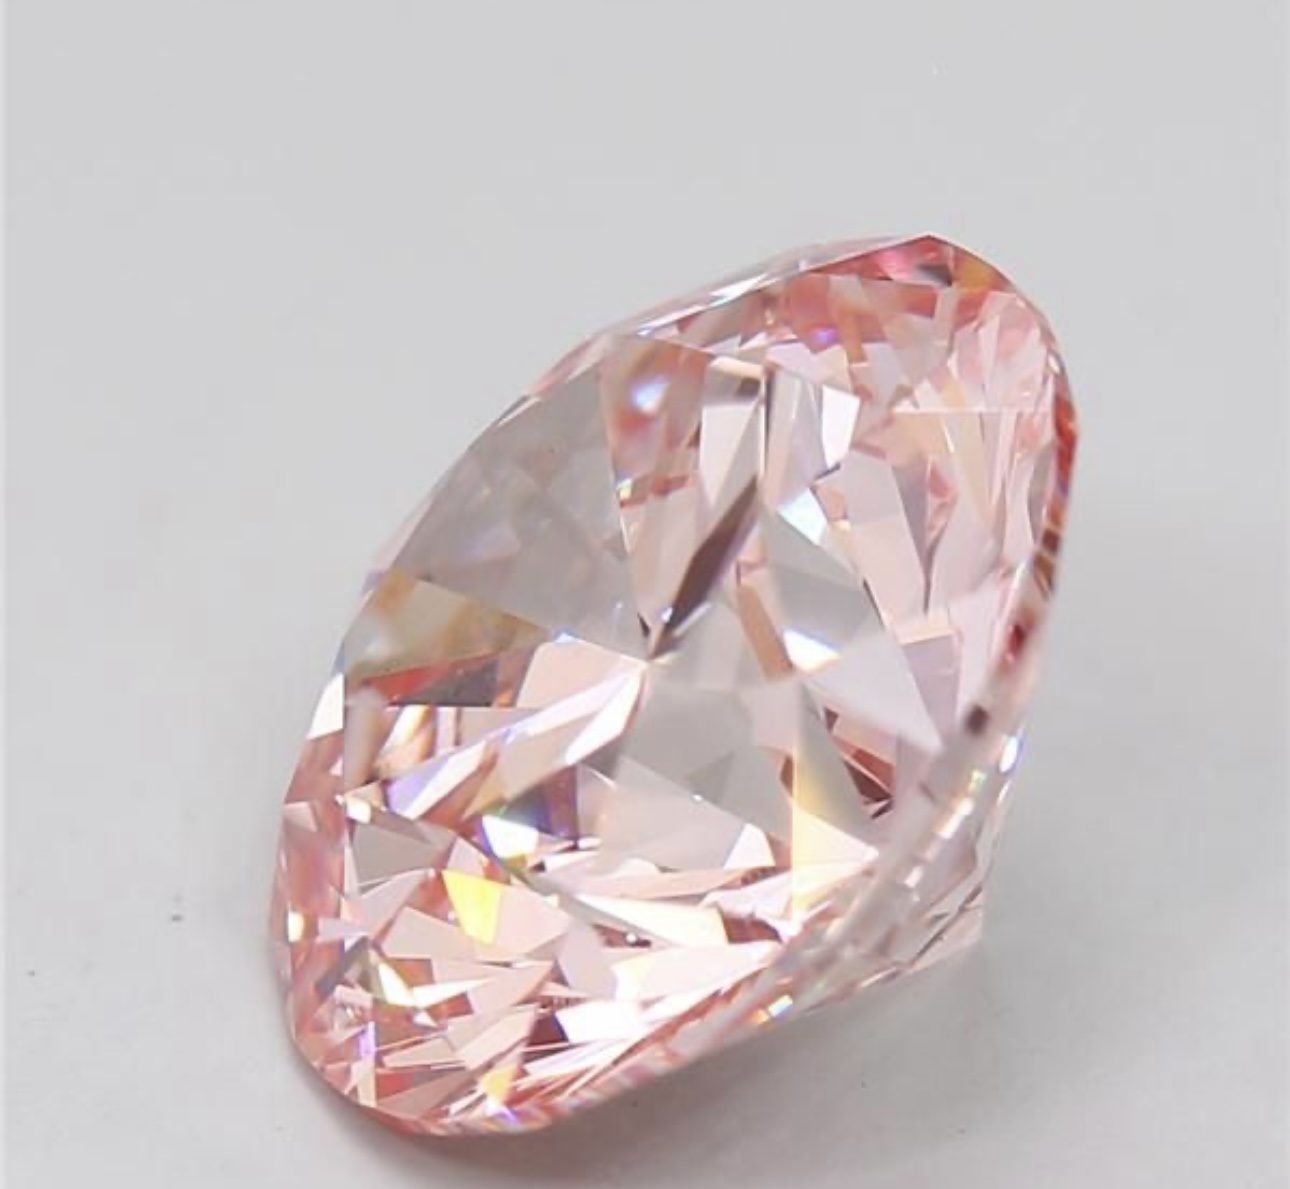 Round Brilliant Cut Diamond 7.42 Carat Fancy Pink Colour VS1 Clarity - IGI Certificate - Image 3 of 8